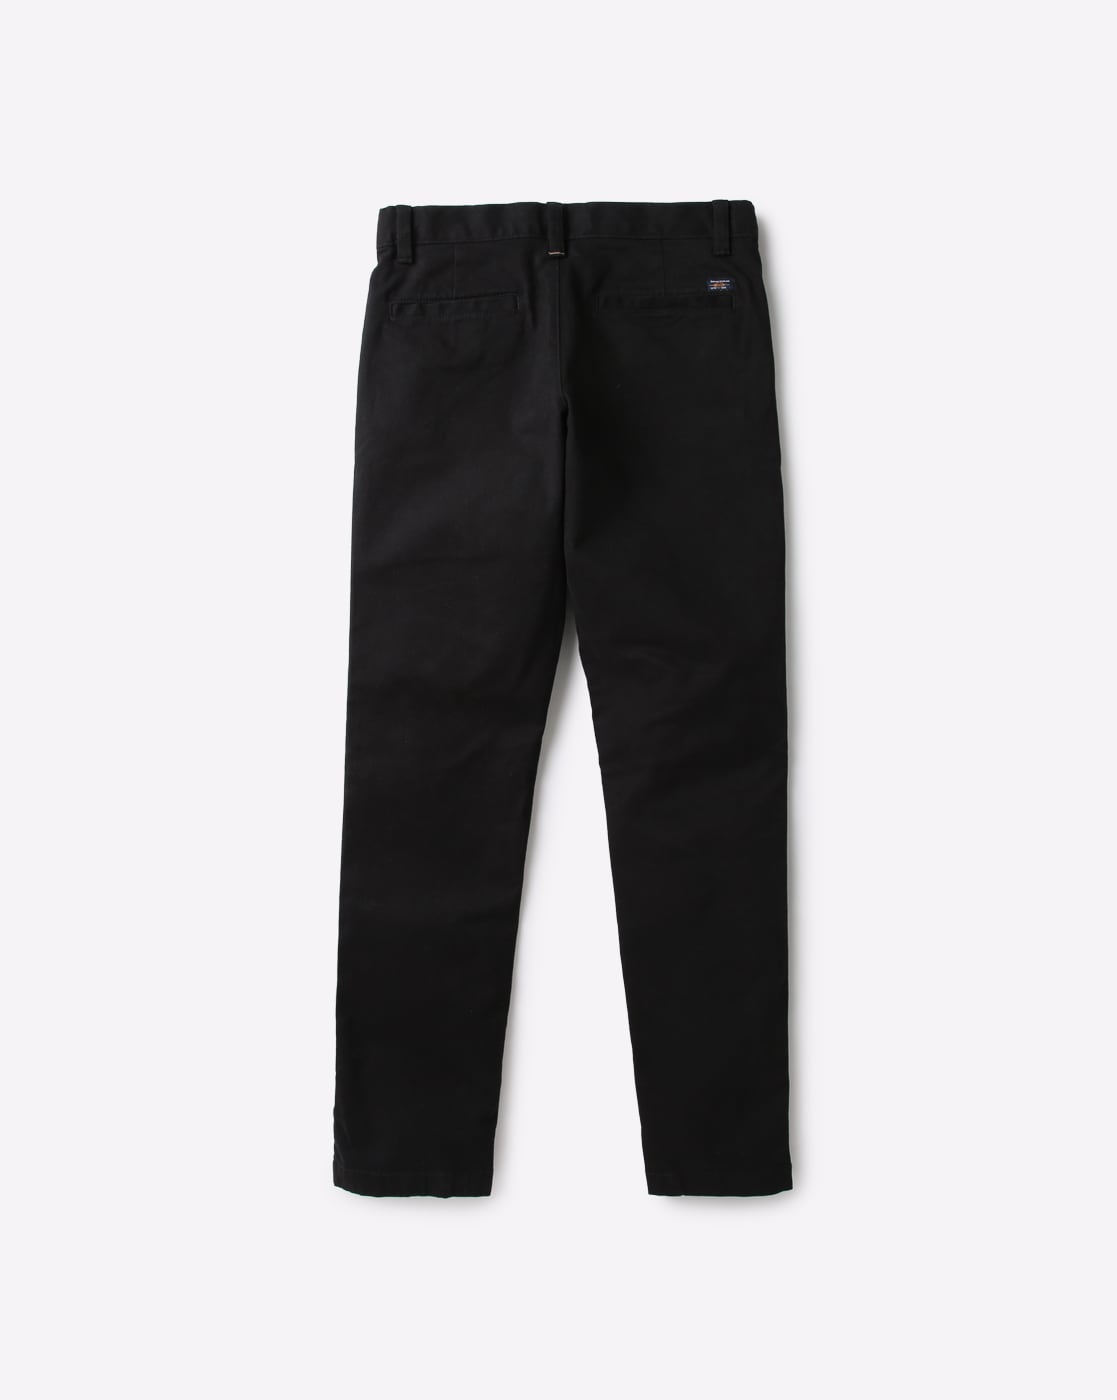 Kids New Boys Pants Jeans Cotton Solid Black Trousers Autumn Number 7 Print  Pencil Pants Korean Children Clothing 4T 8 12 13 Yrs